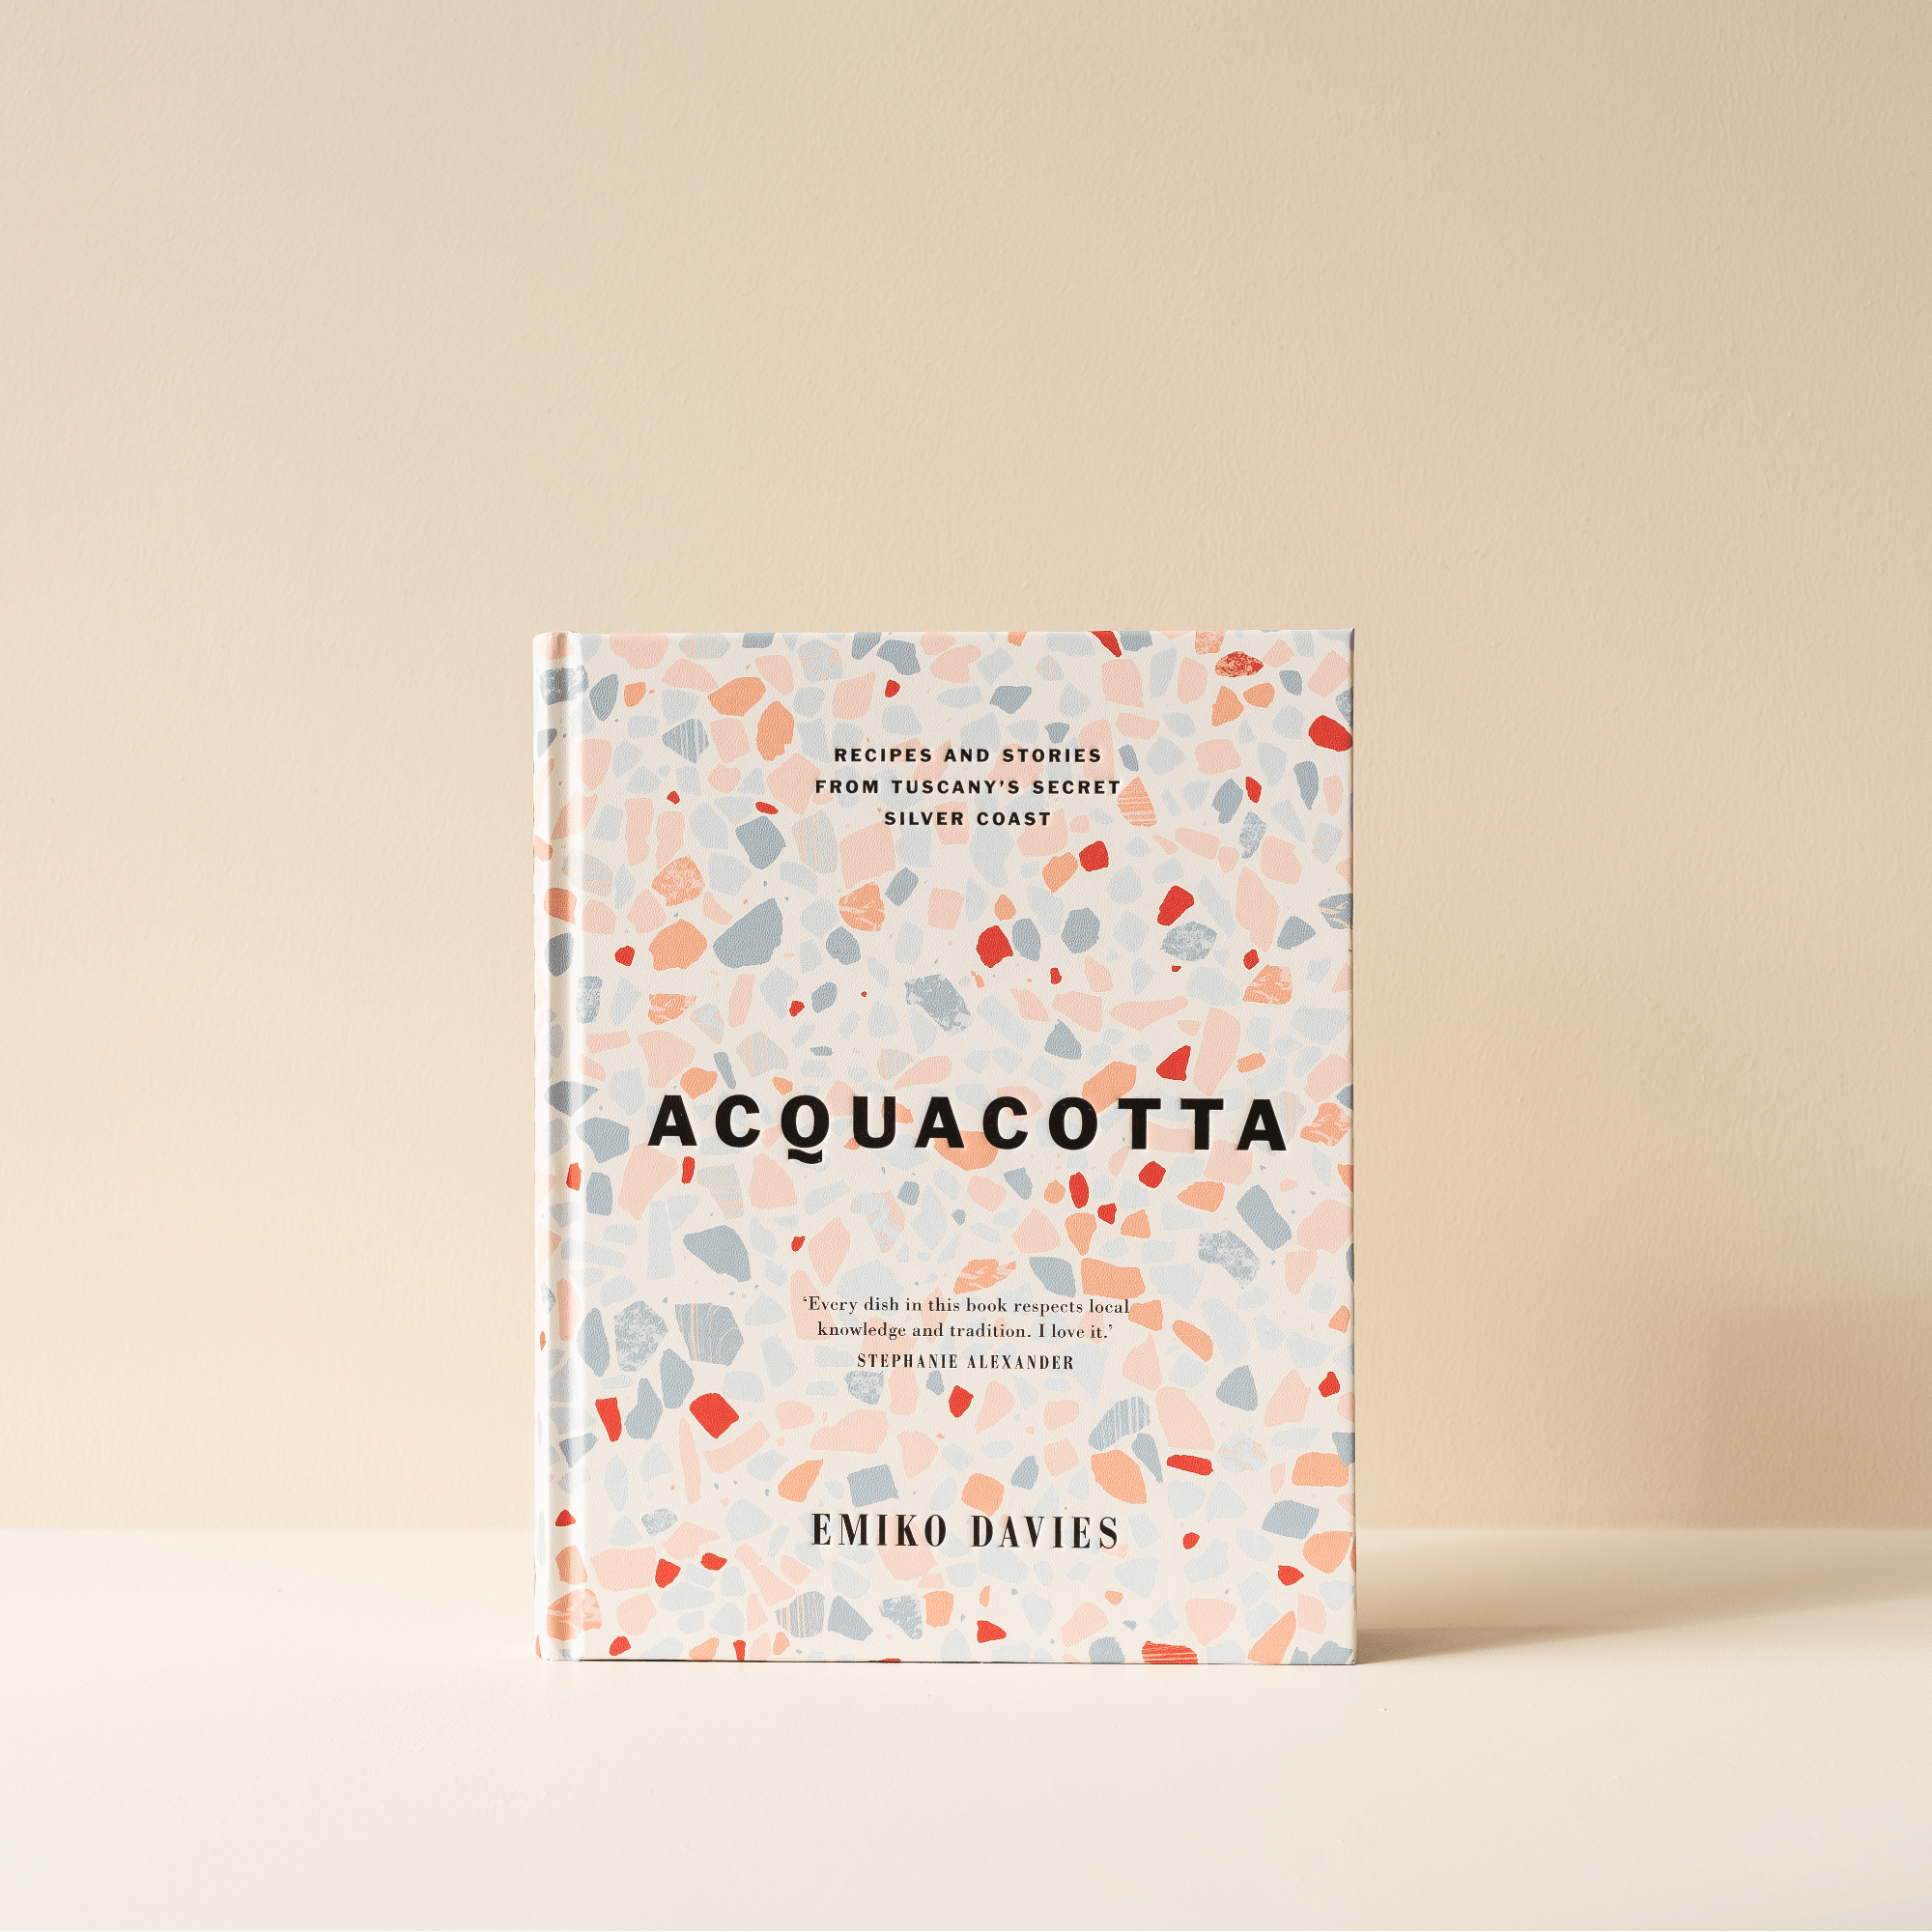 Image of Acquacotta book by Emiko Davies